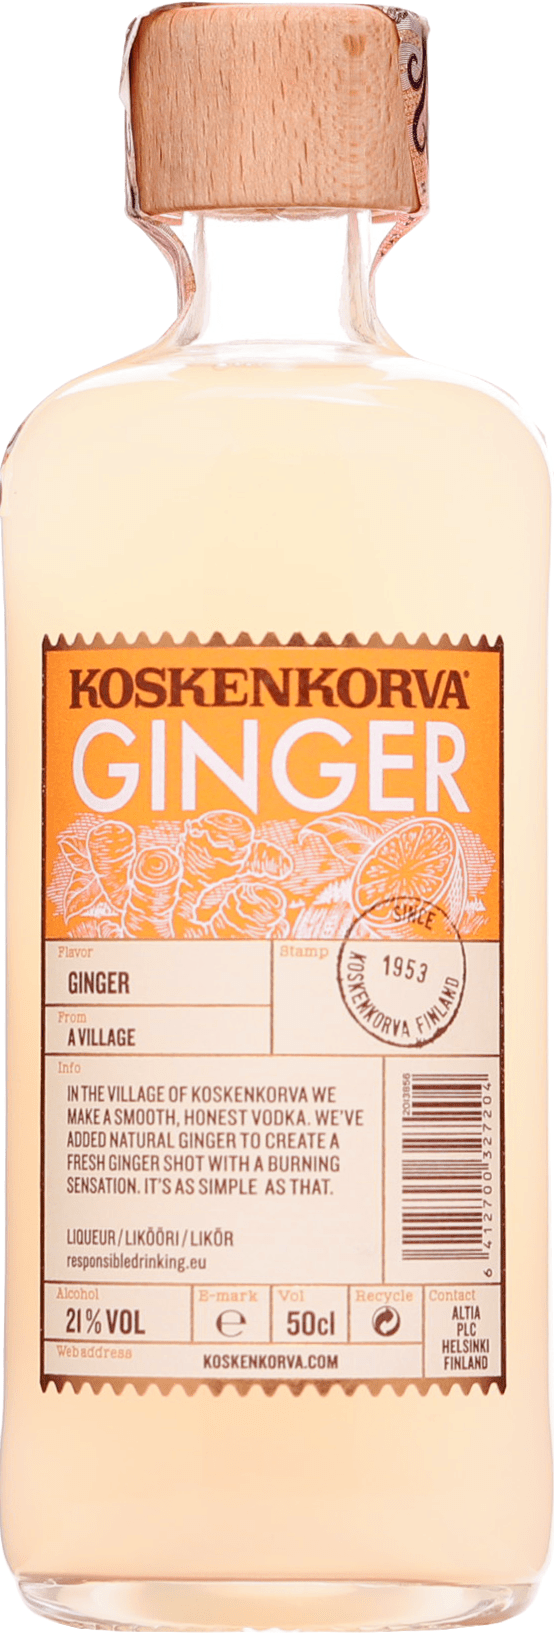 Koskenkorva Ginger 0,5l 21% (čistá fľaša)